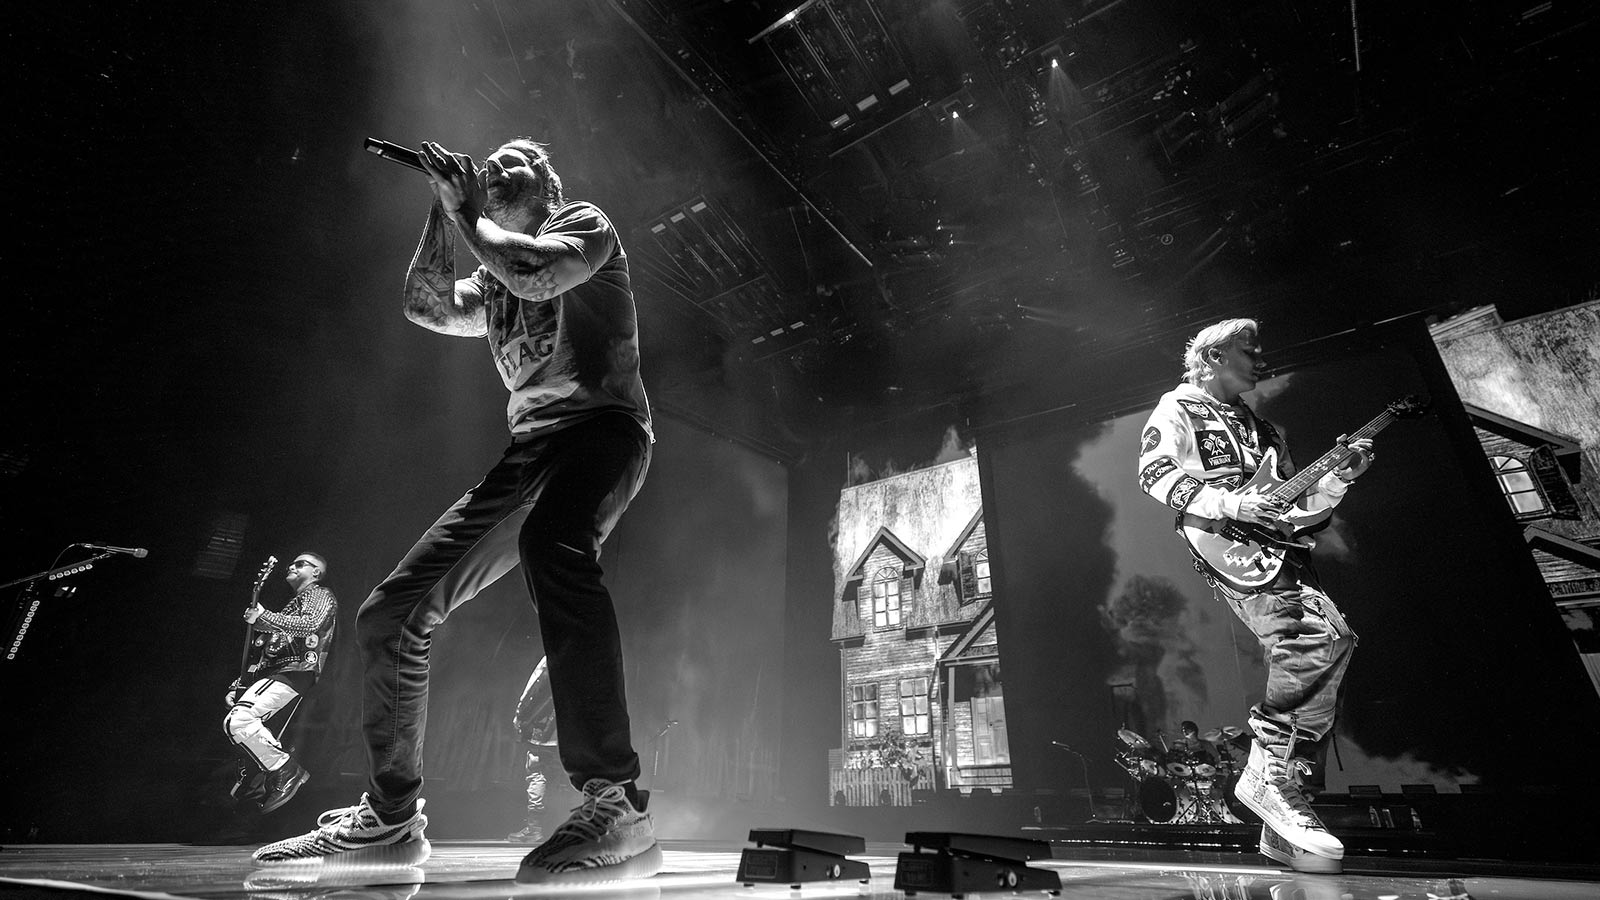 Avenged Sevenfold Next Concert Setlist & tour dates 2024